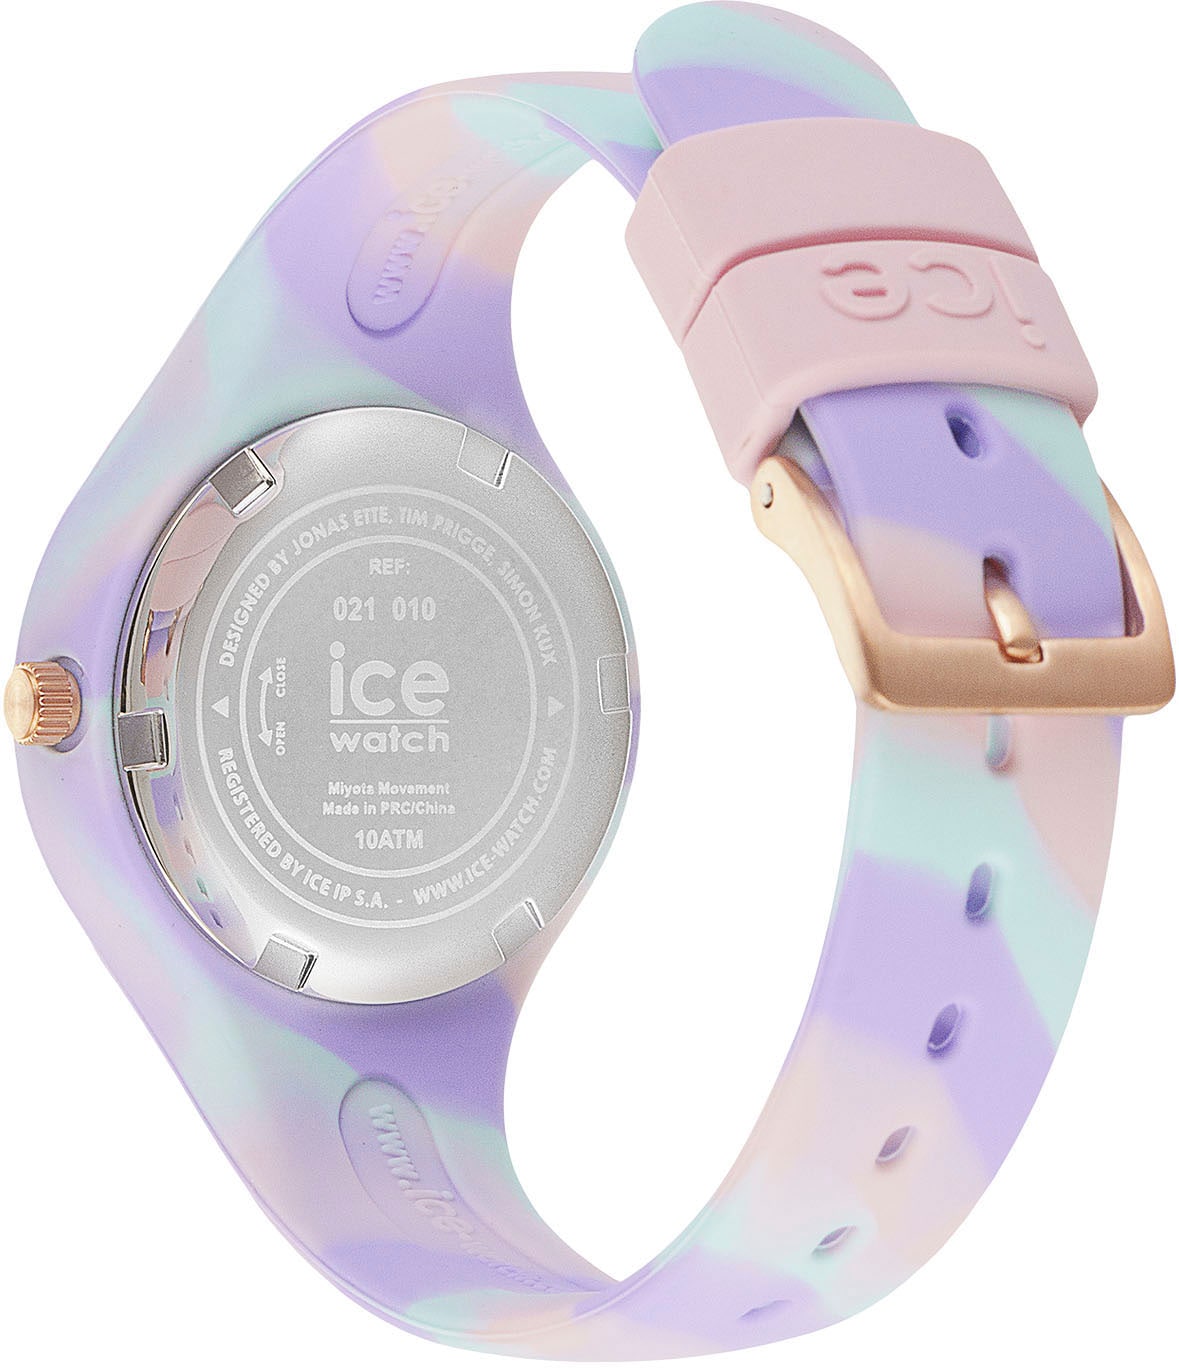 ice-watch Quarzuhr »ICE tie OTTO auch Extra-Small bei dye - lilac Geschenk - 021010«, 3H, online Sweet - ideal and als